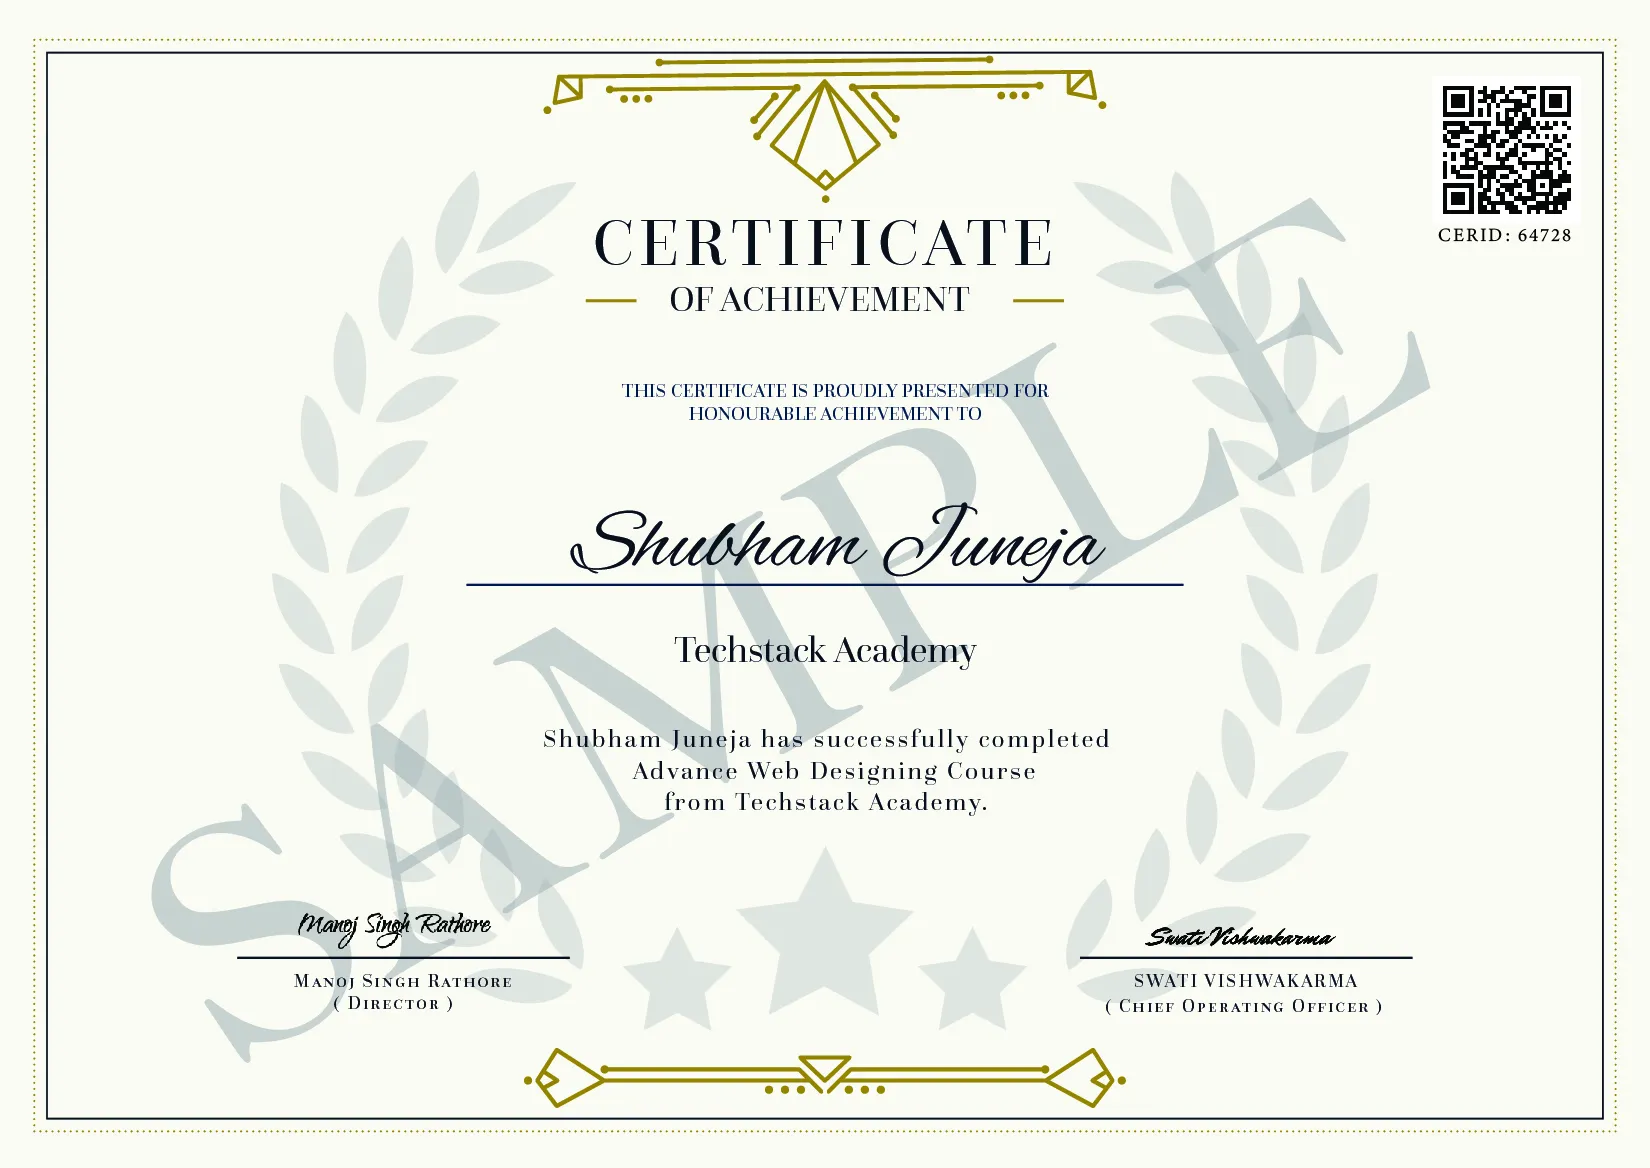 Advance Web Designing Course Certificate